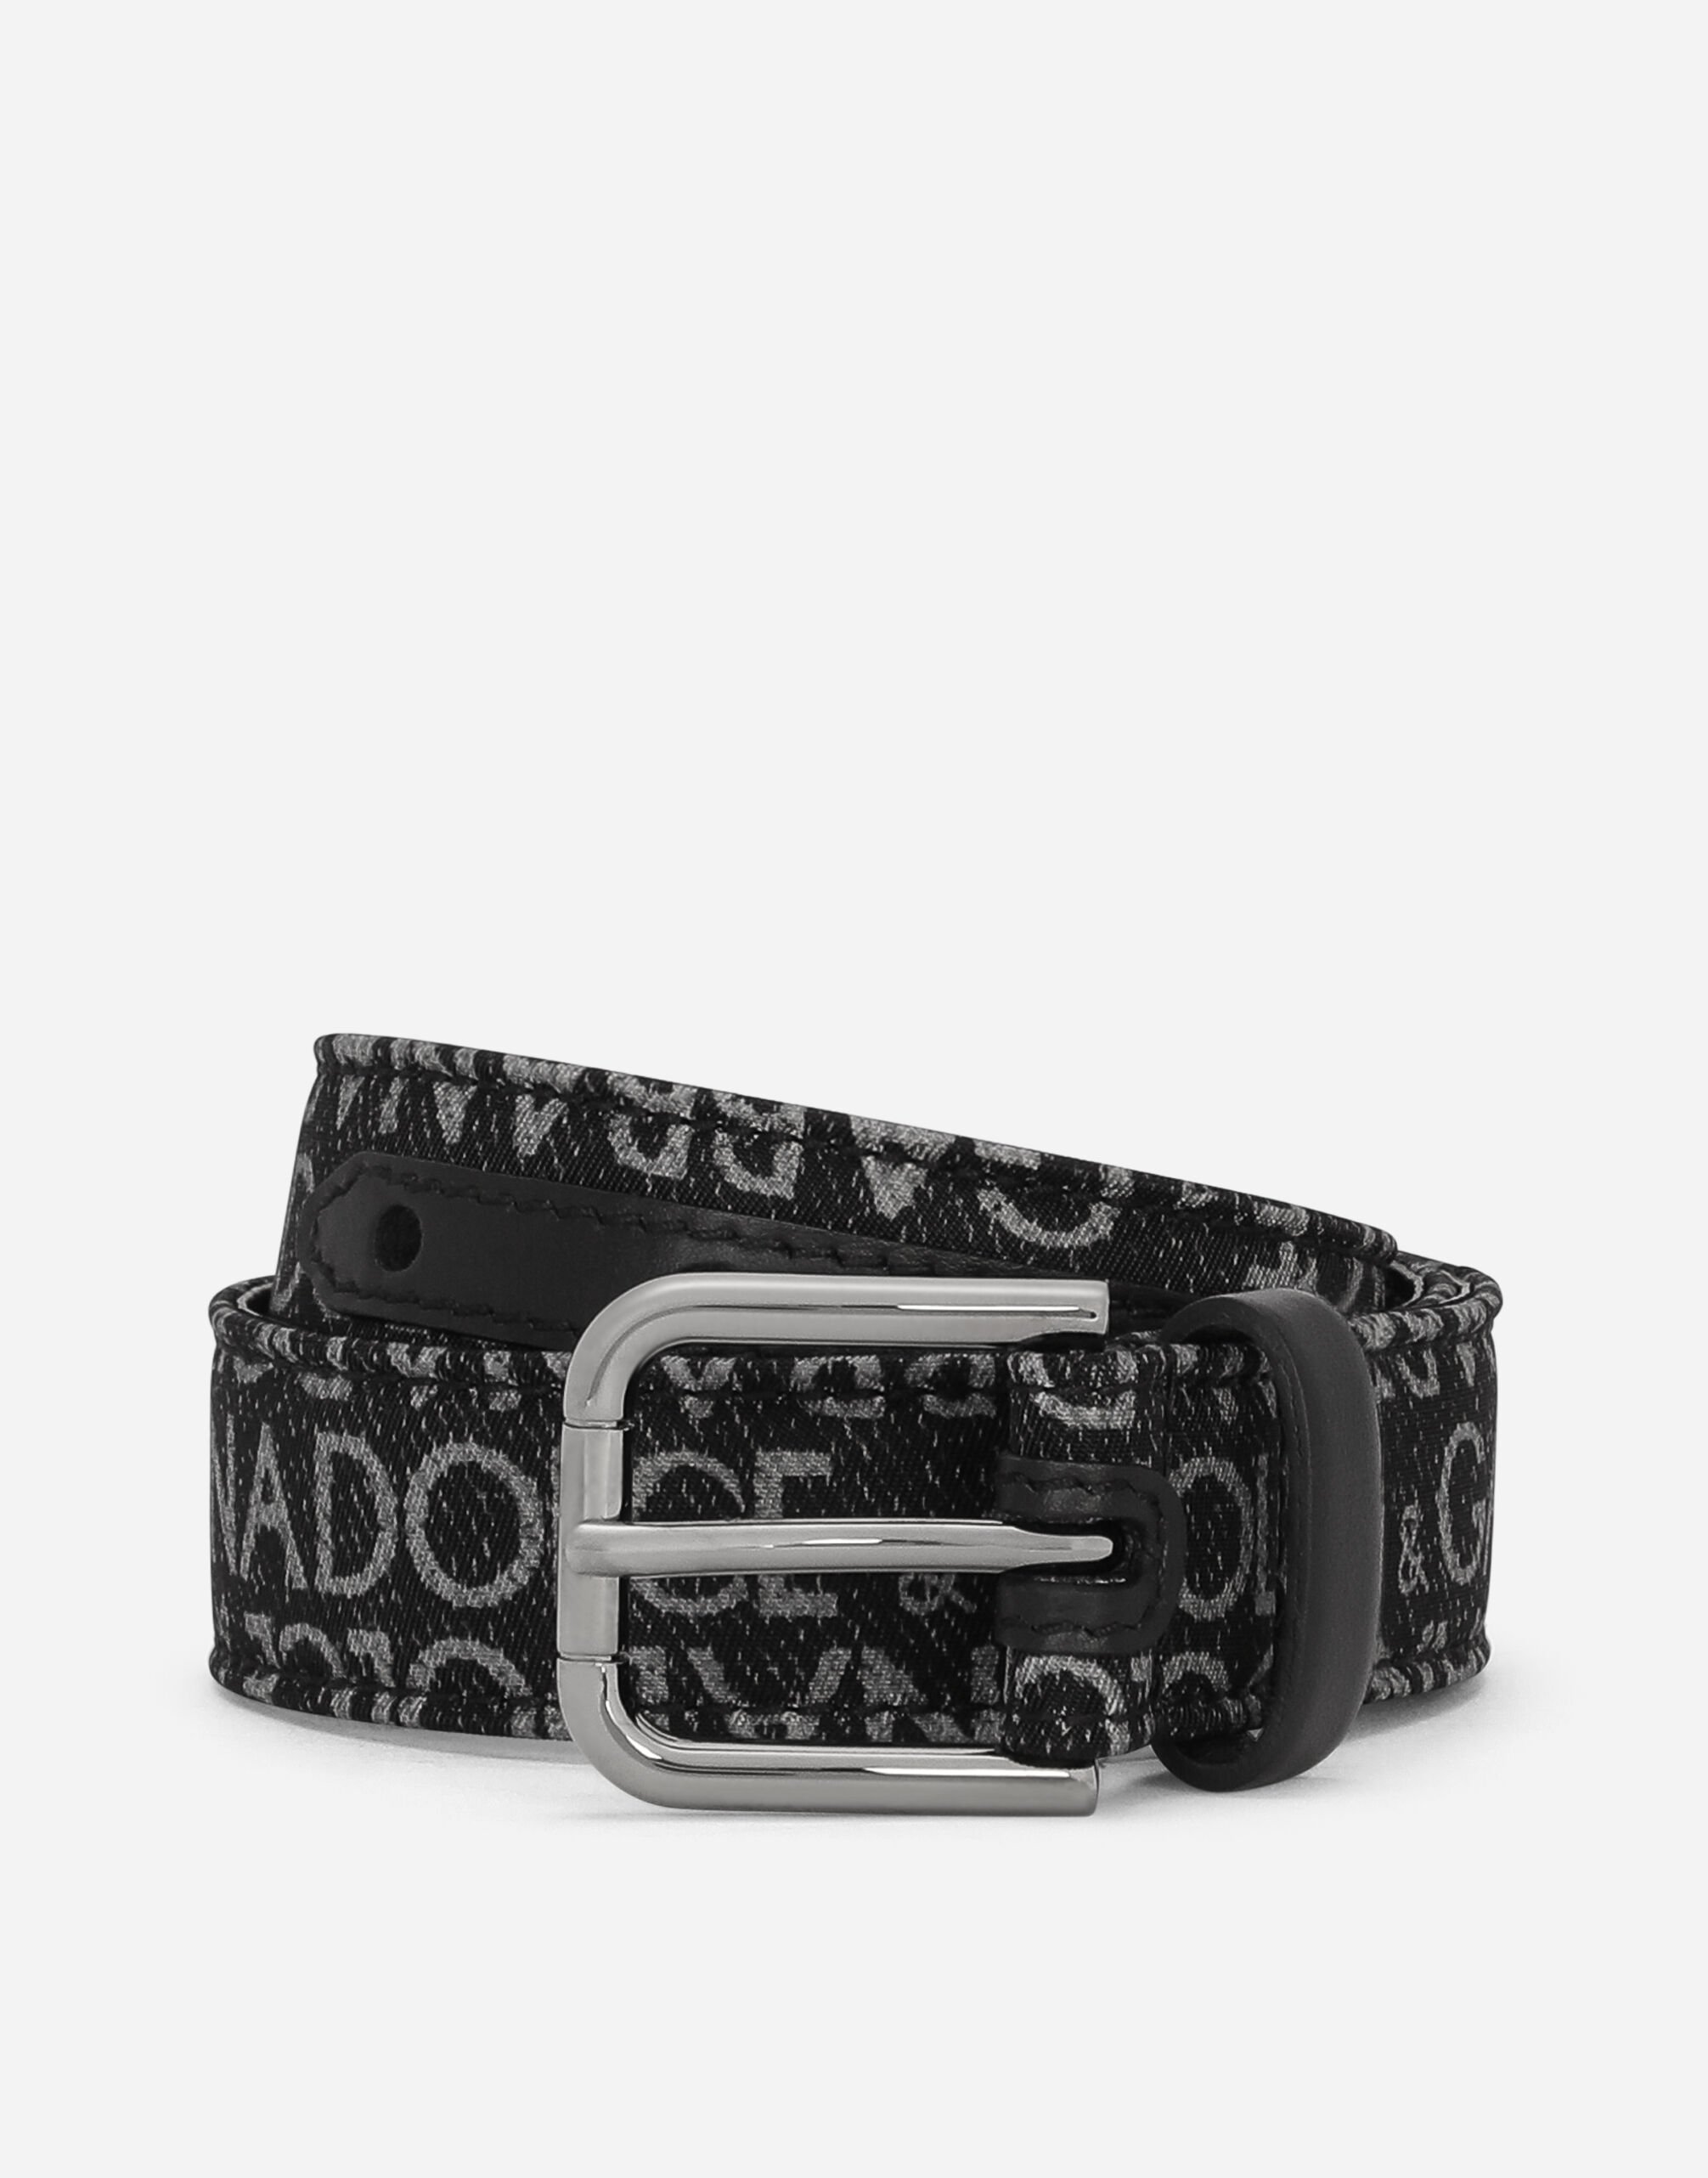 Dolce&Gabbana Printed nylon belt Black LBKH96JCVK6